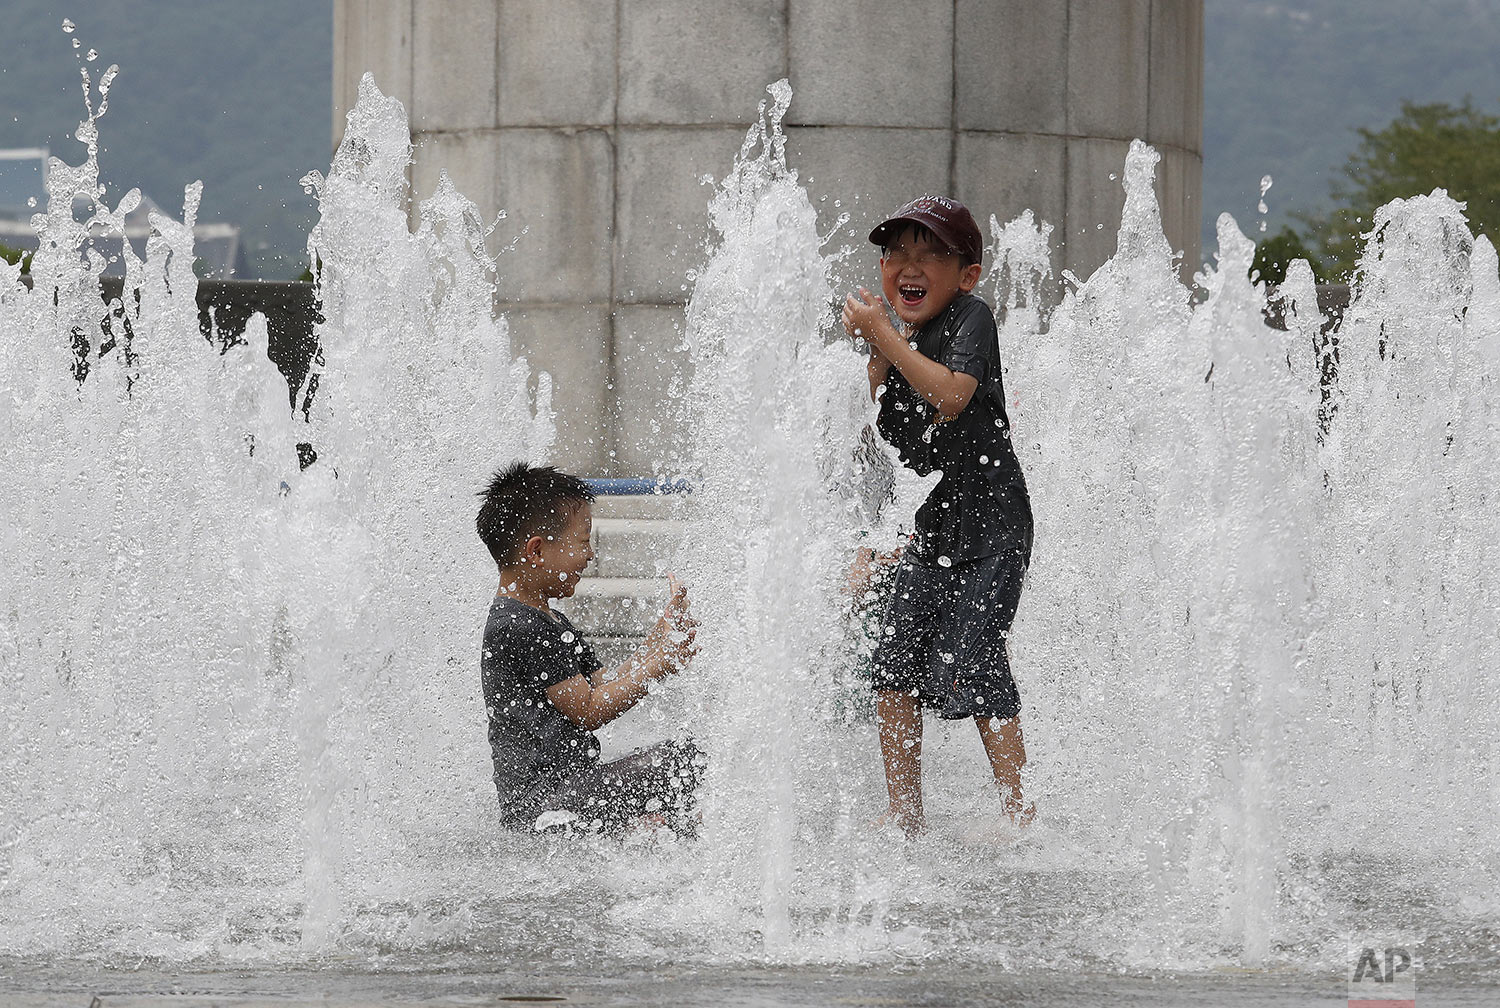  Boys cool off in an outdoor water fountain in Seoul, South Korea, Thursday, Aug. 8, 2019. (AP Photo/Ahn Young-joon) 